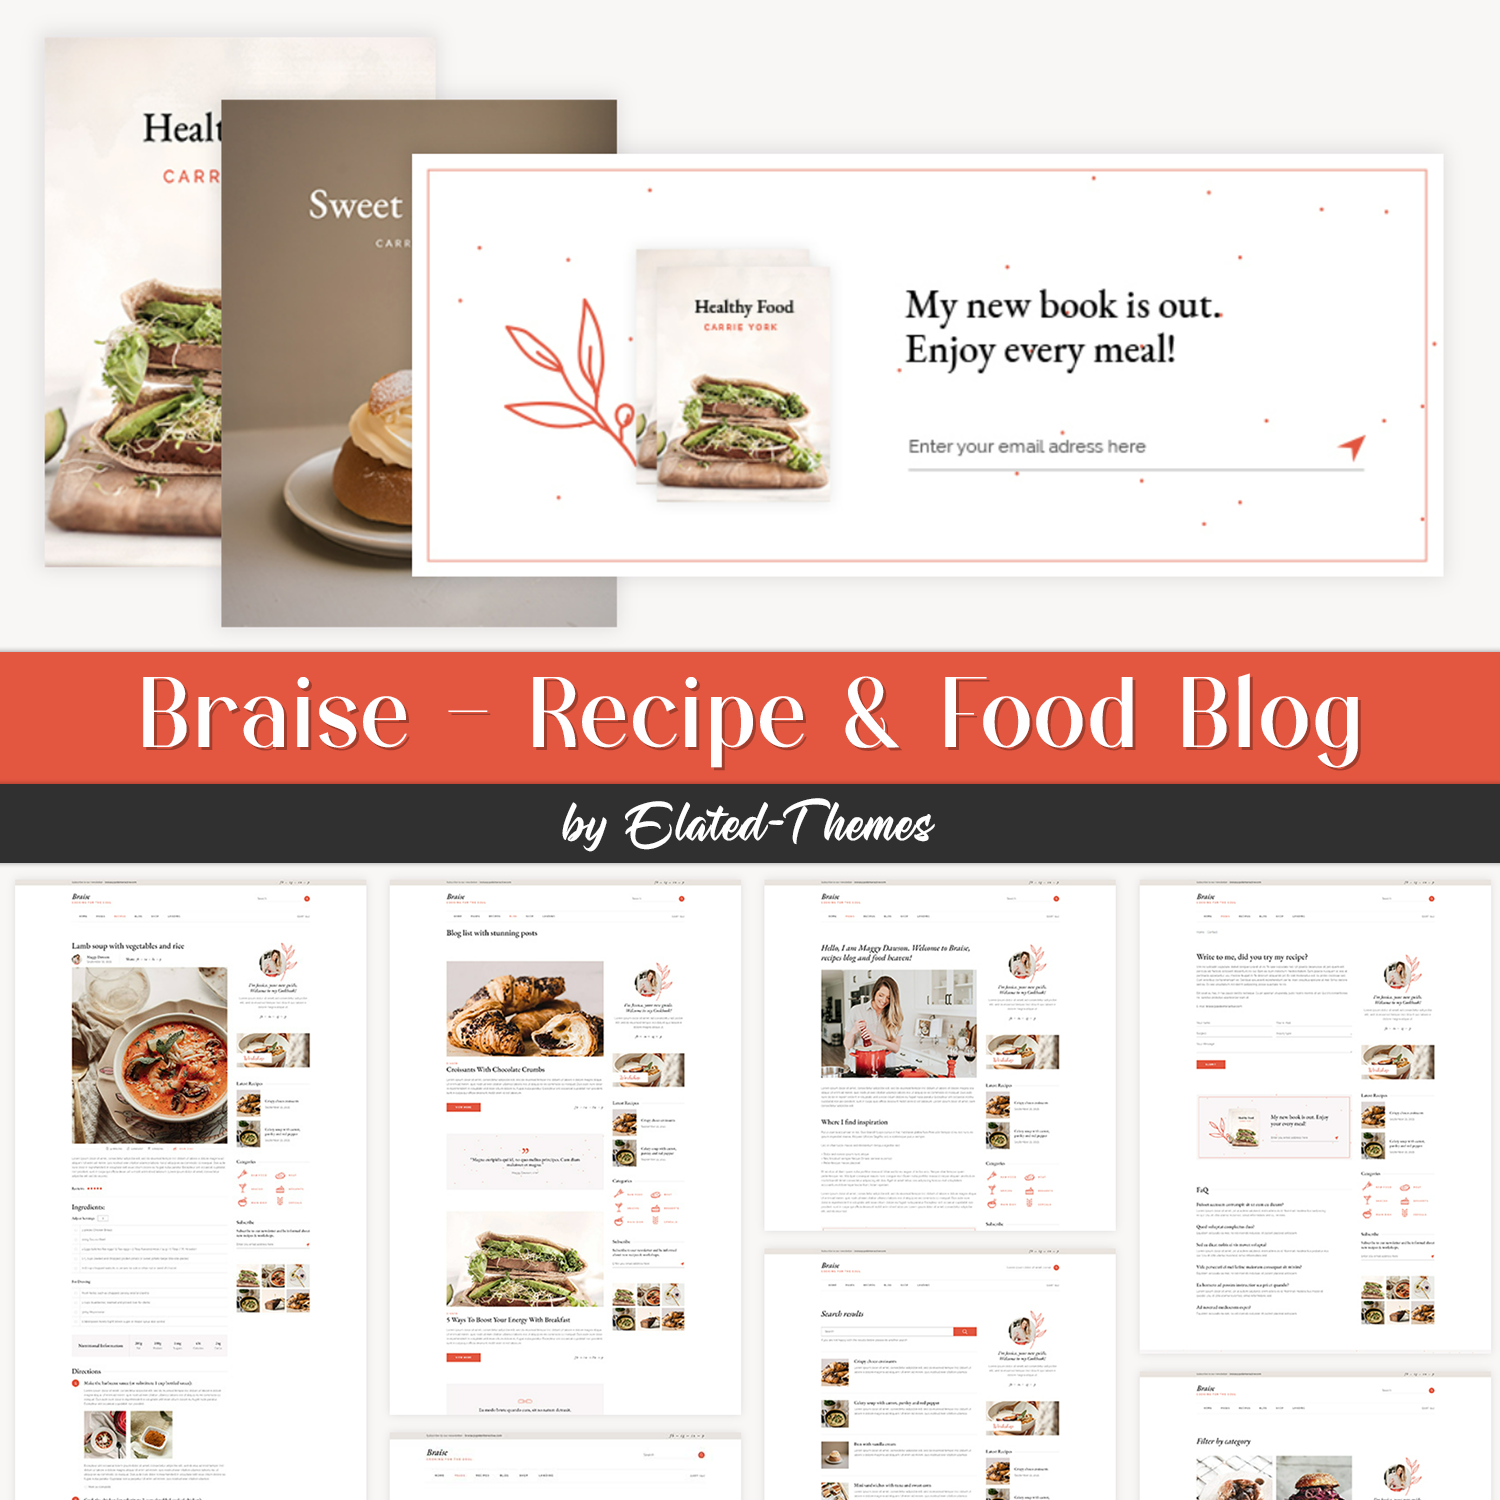 Braise - Recipe & Food Blog cover.